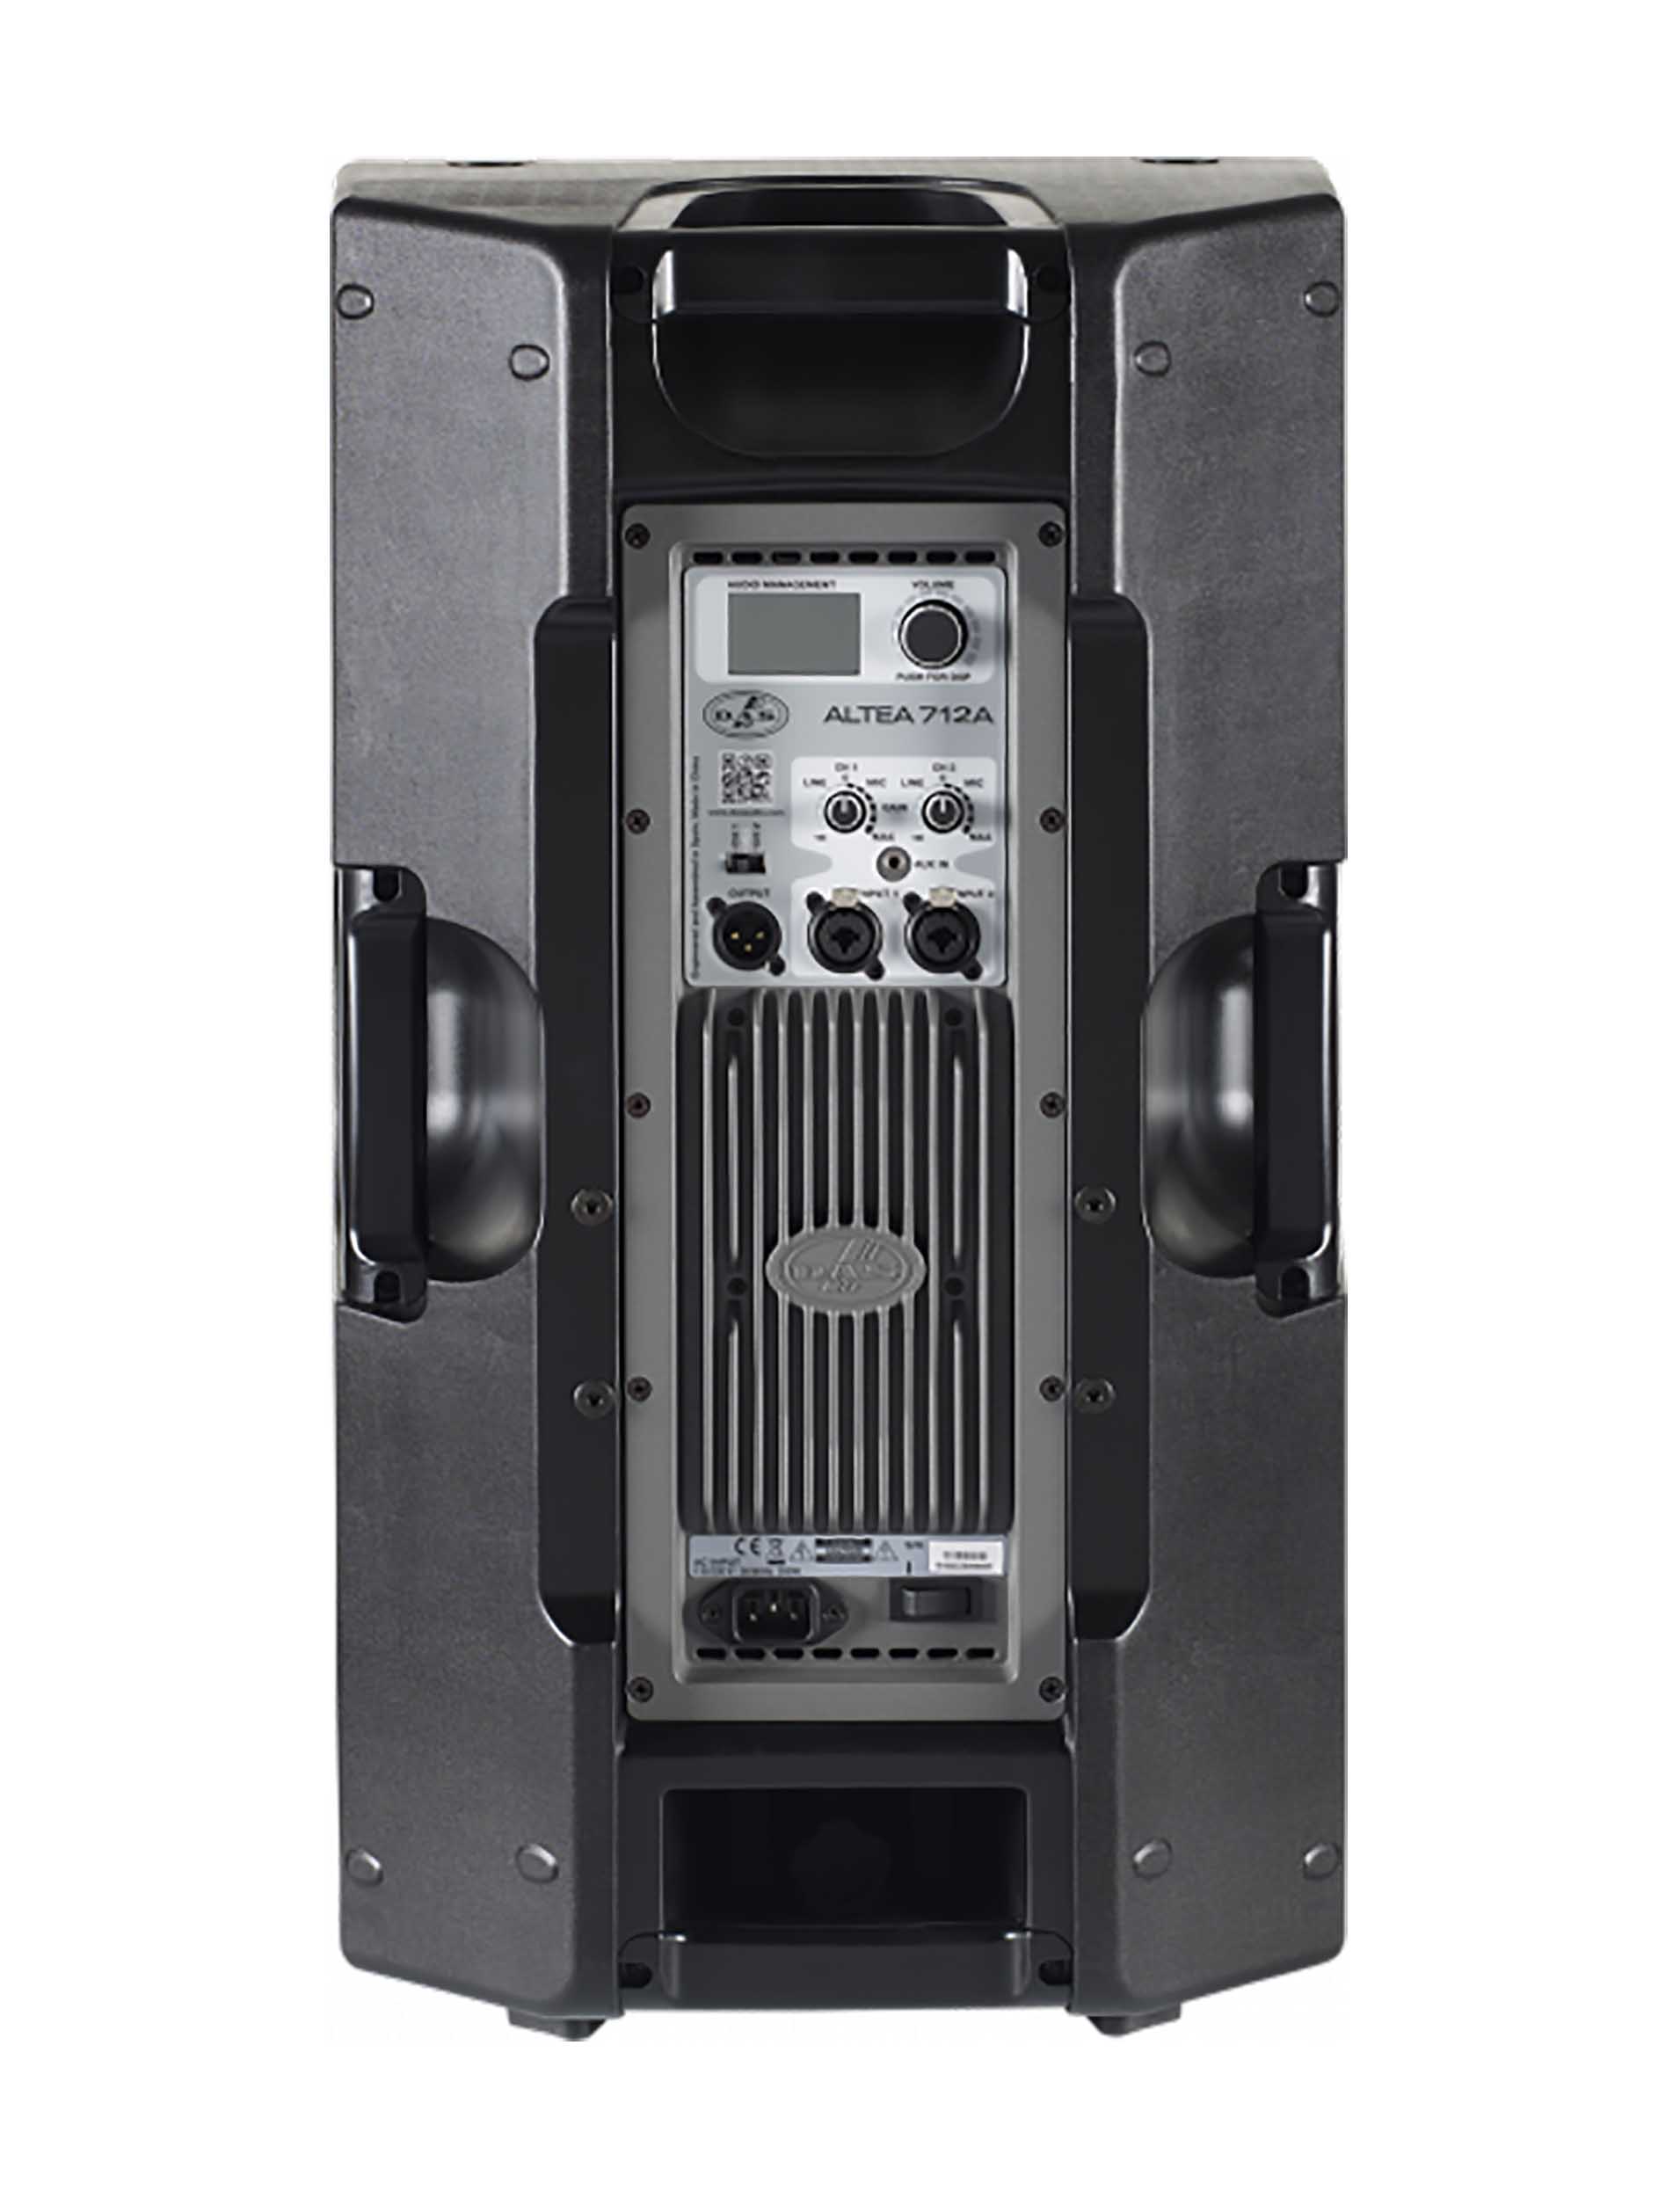 DAS Audio 712ACVRALTEA12, 12-Inch Powered Speaker DJ Package with Cover by DAS Audio